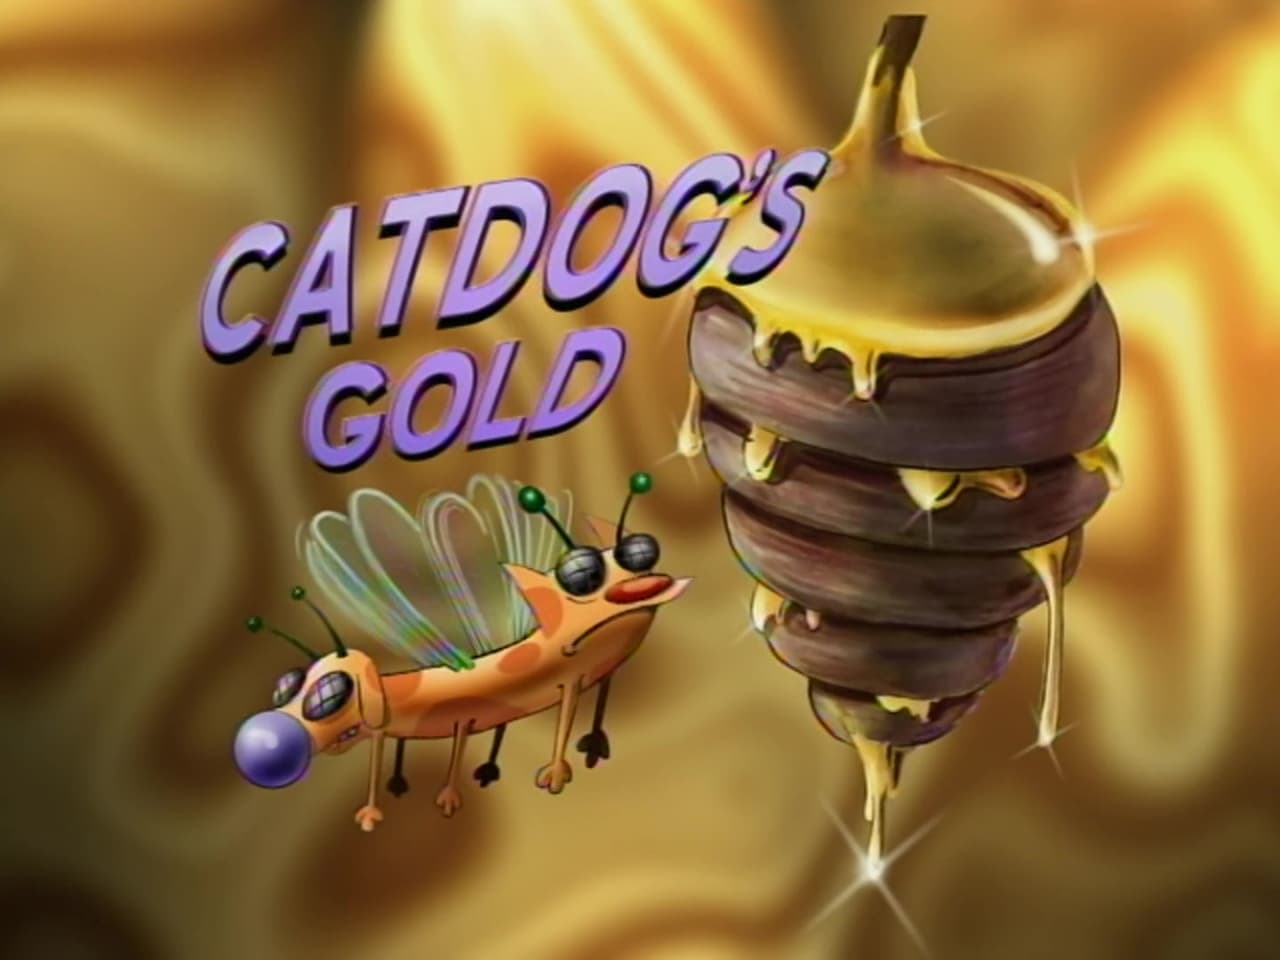 CatDogs Gold